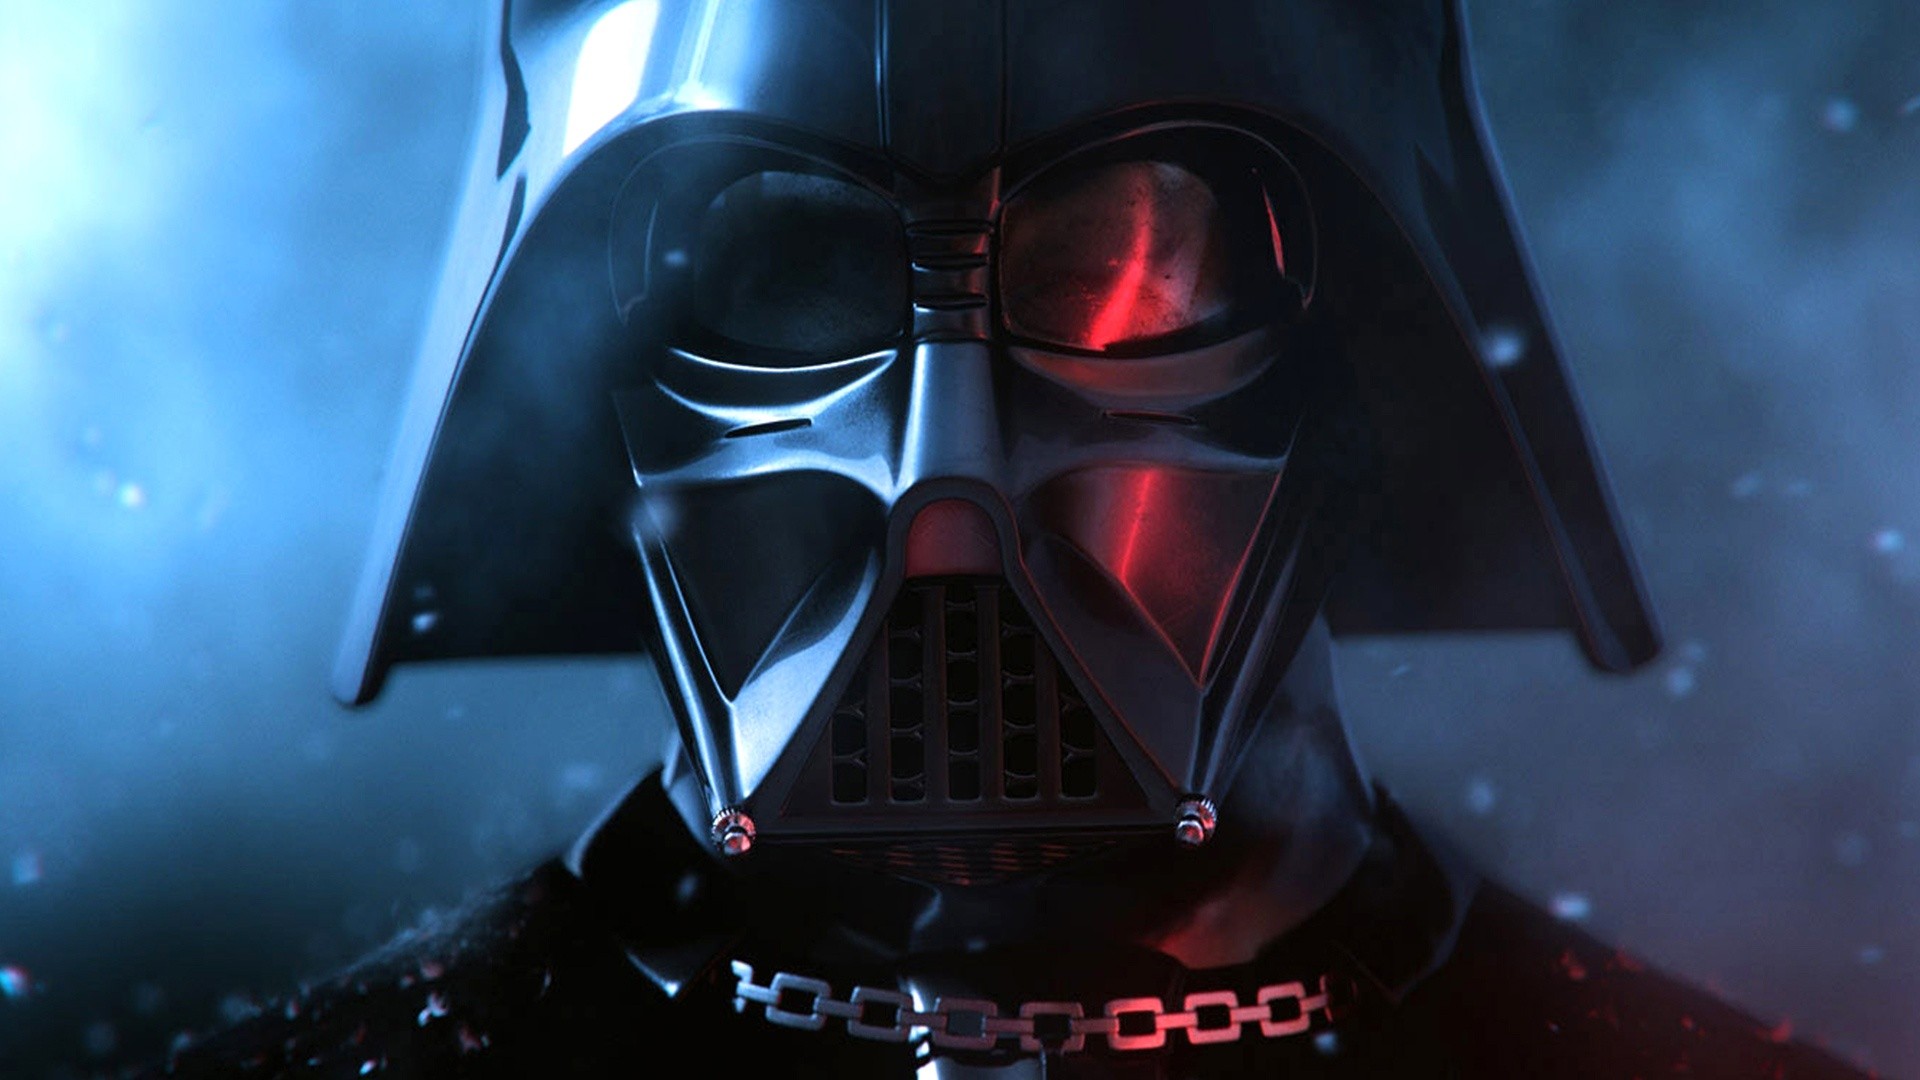 Star Wars Darth Vader Sith Mask 1920x1080